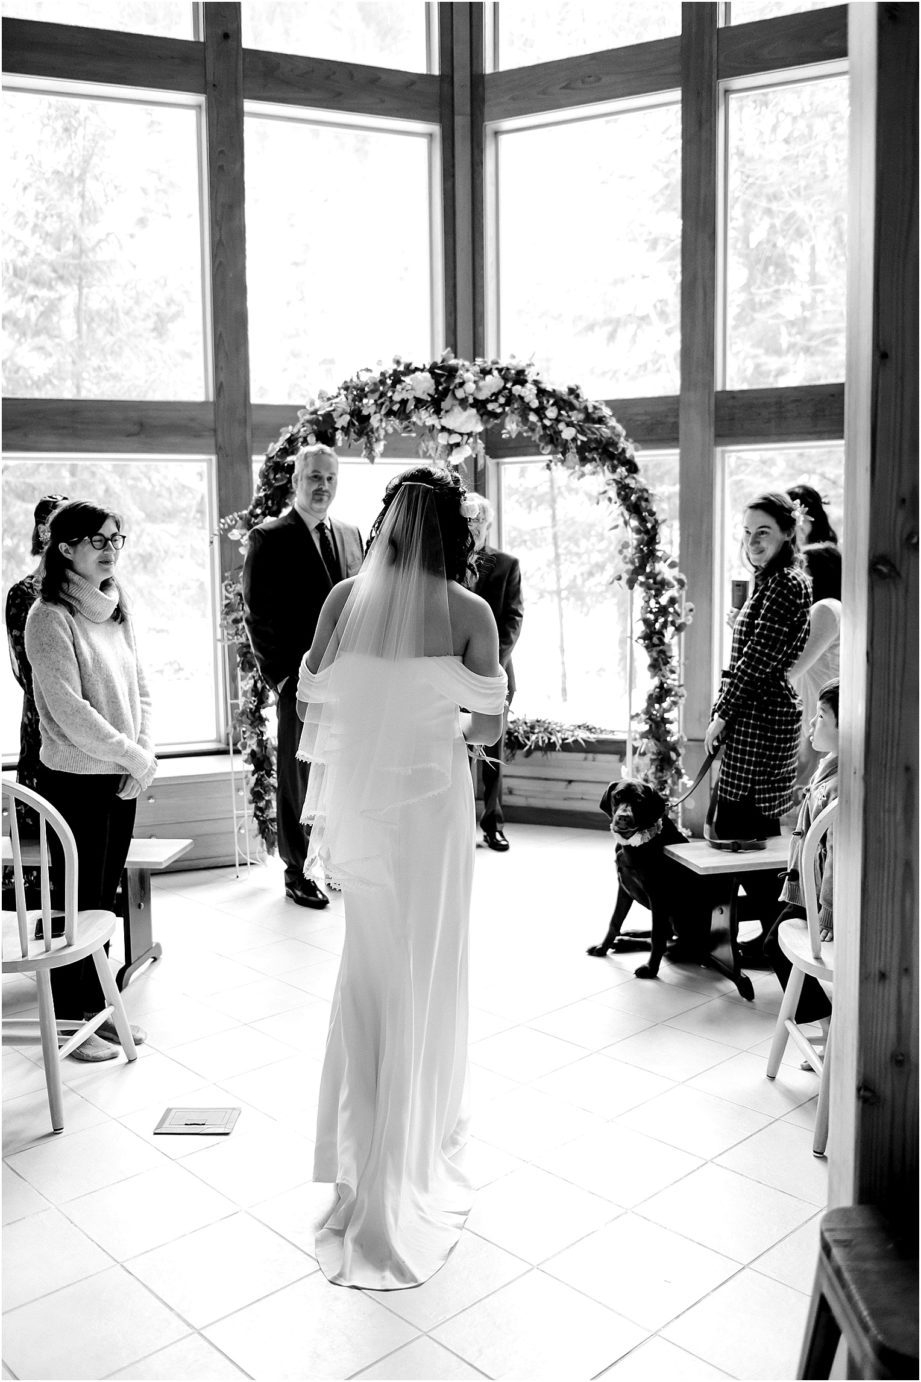 Intimate Methow Valley Elopement bride entering ceremony in lodge